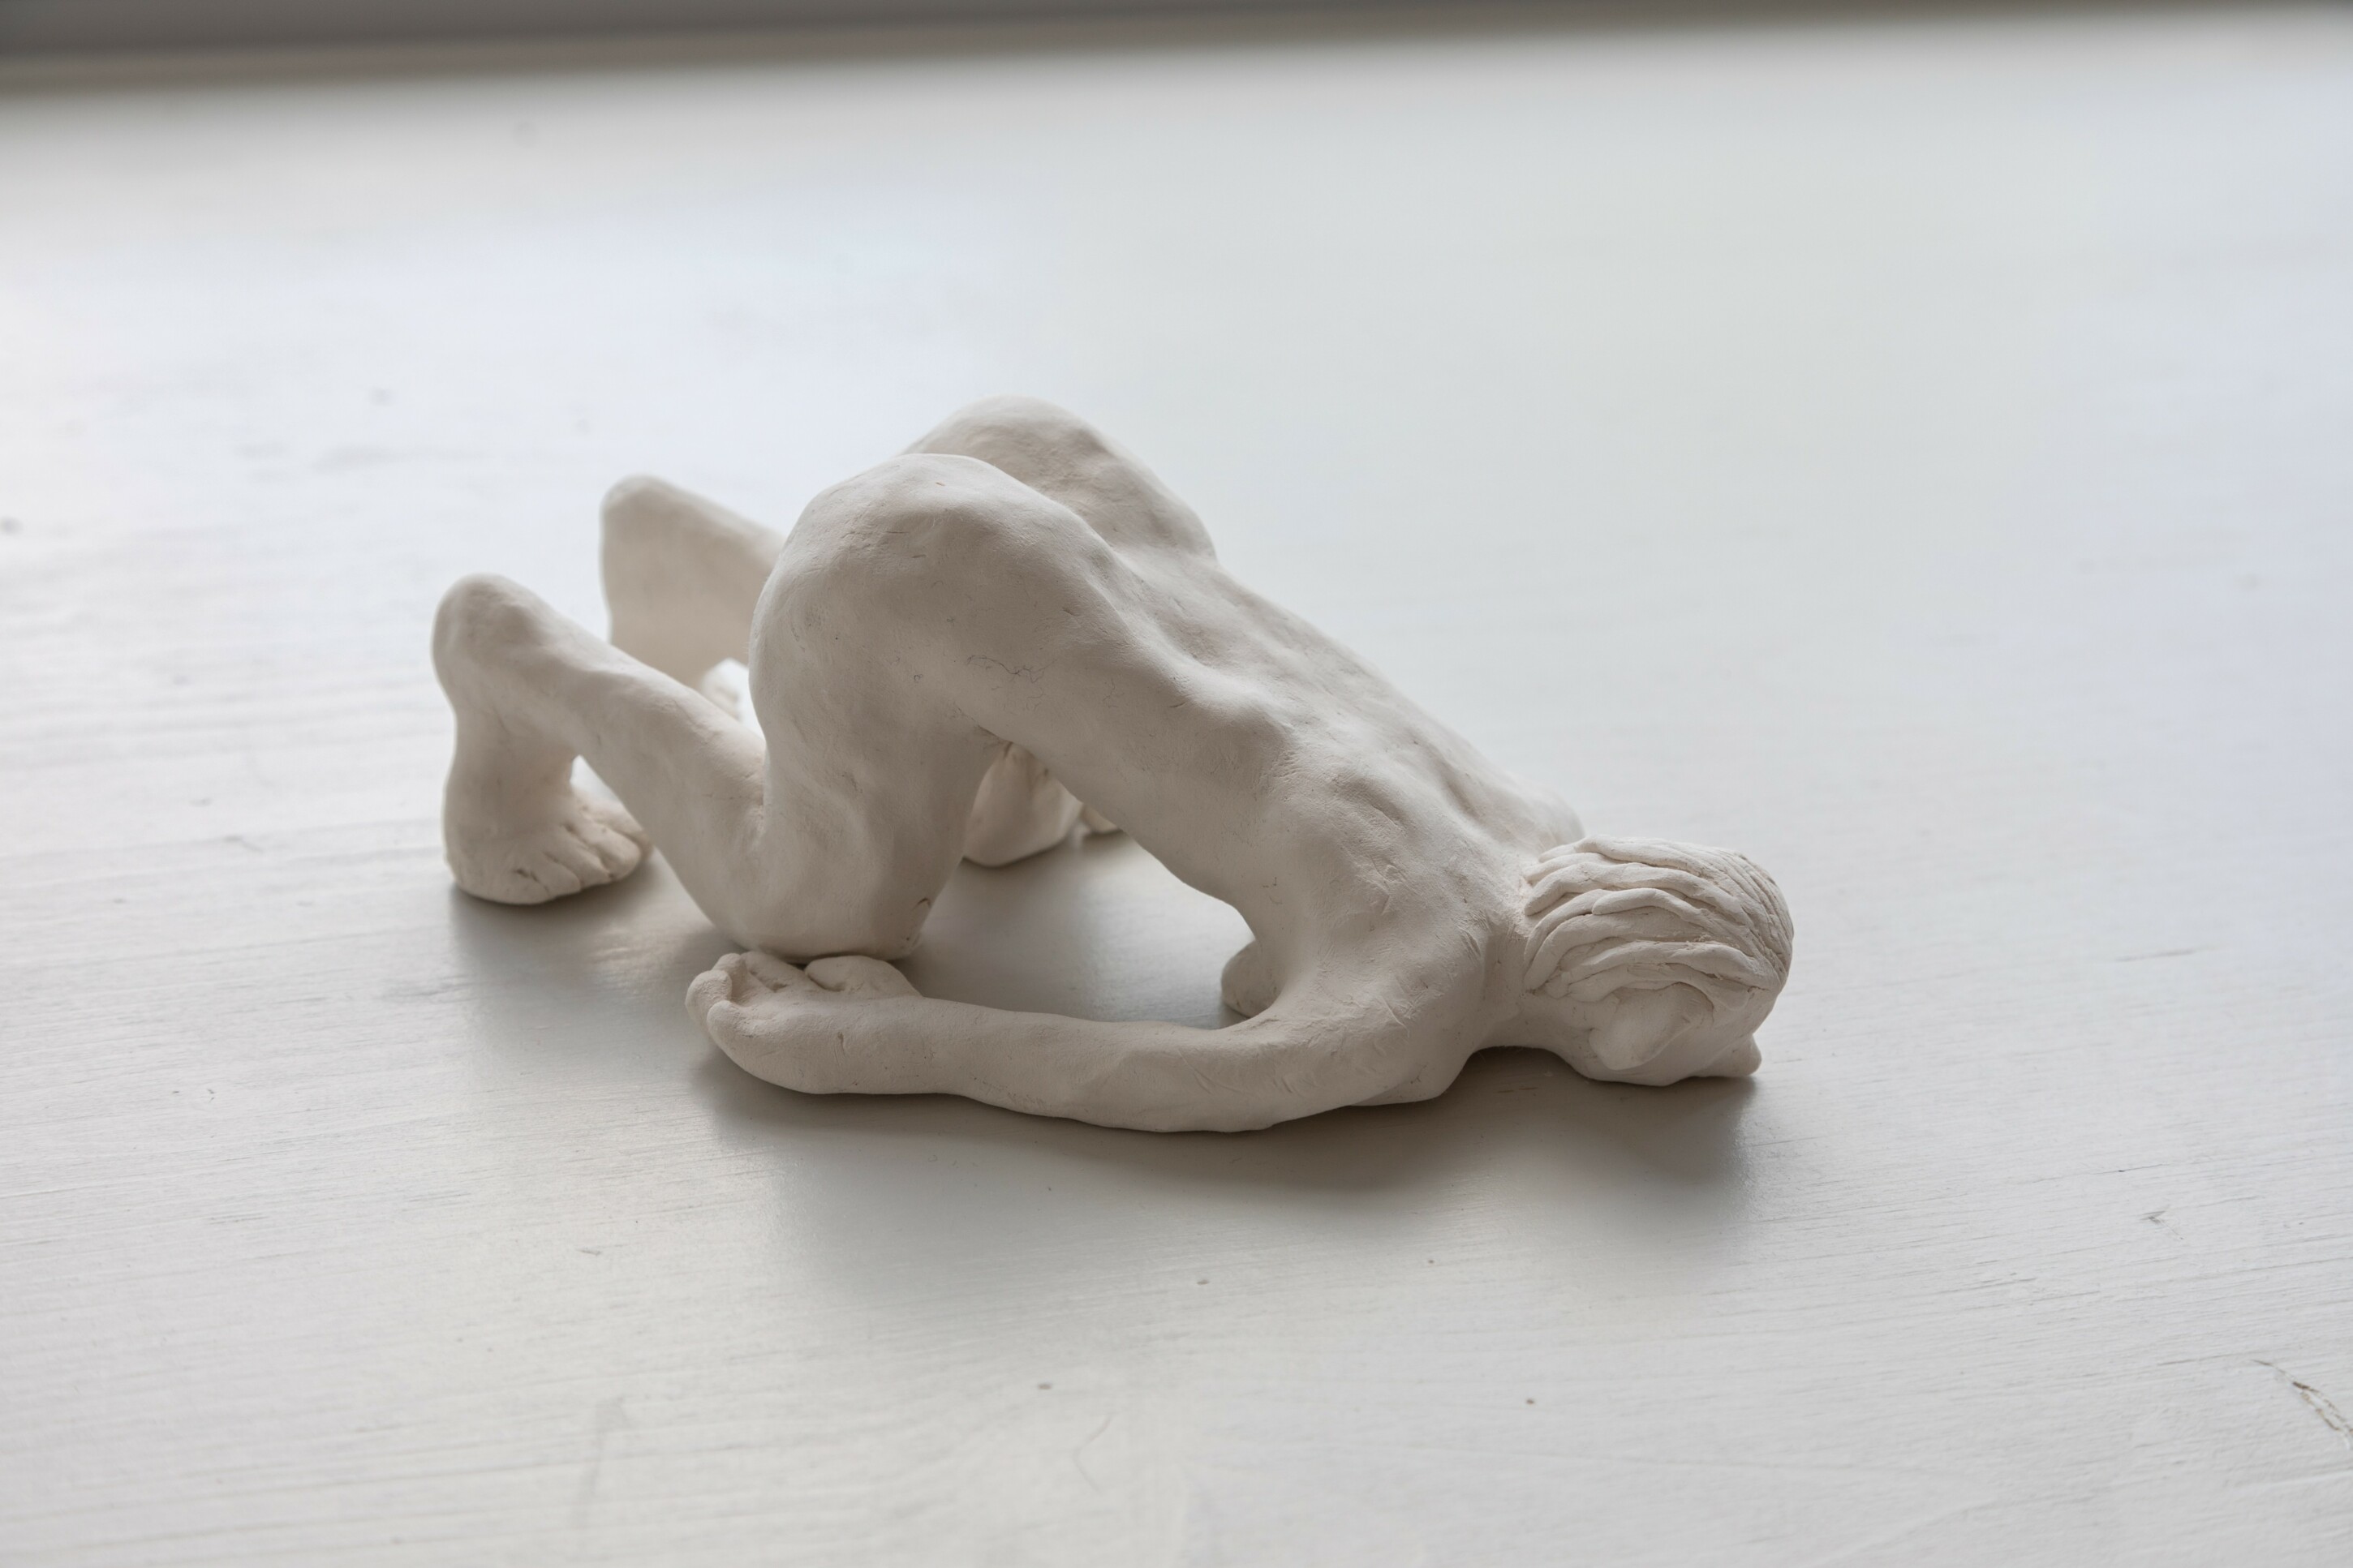 “Ich Bleibe Weich”, 2020, unfired porcelain clay